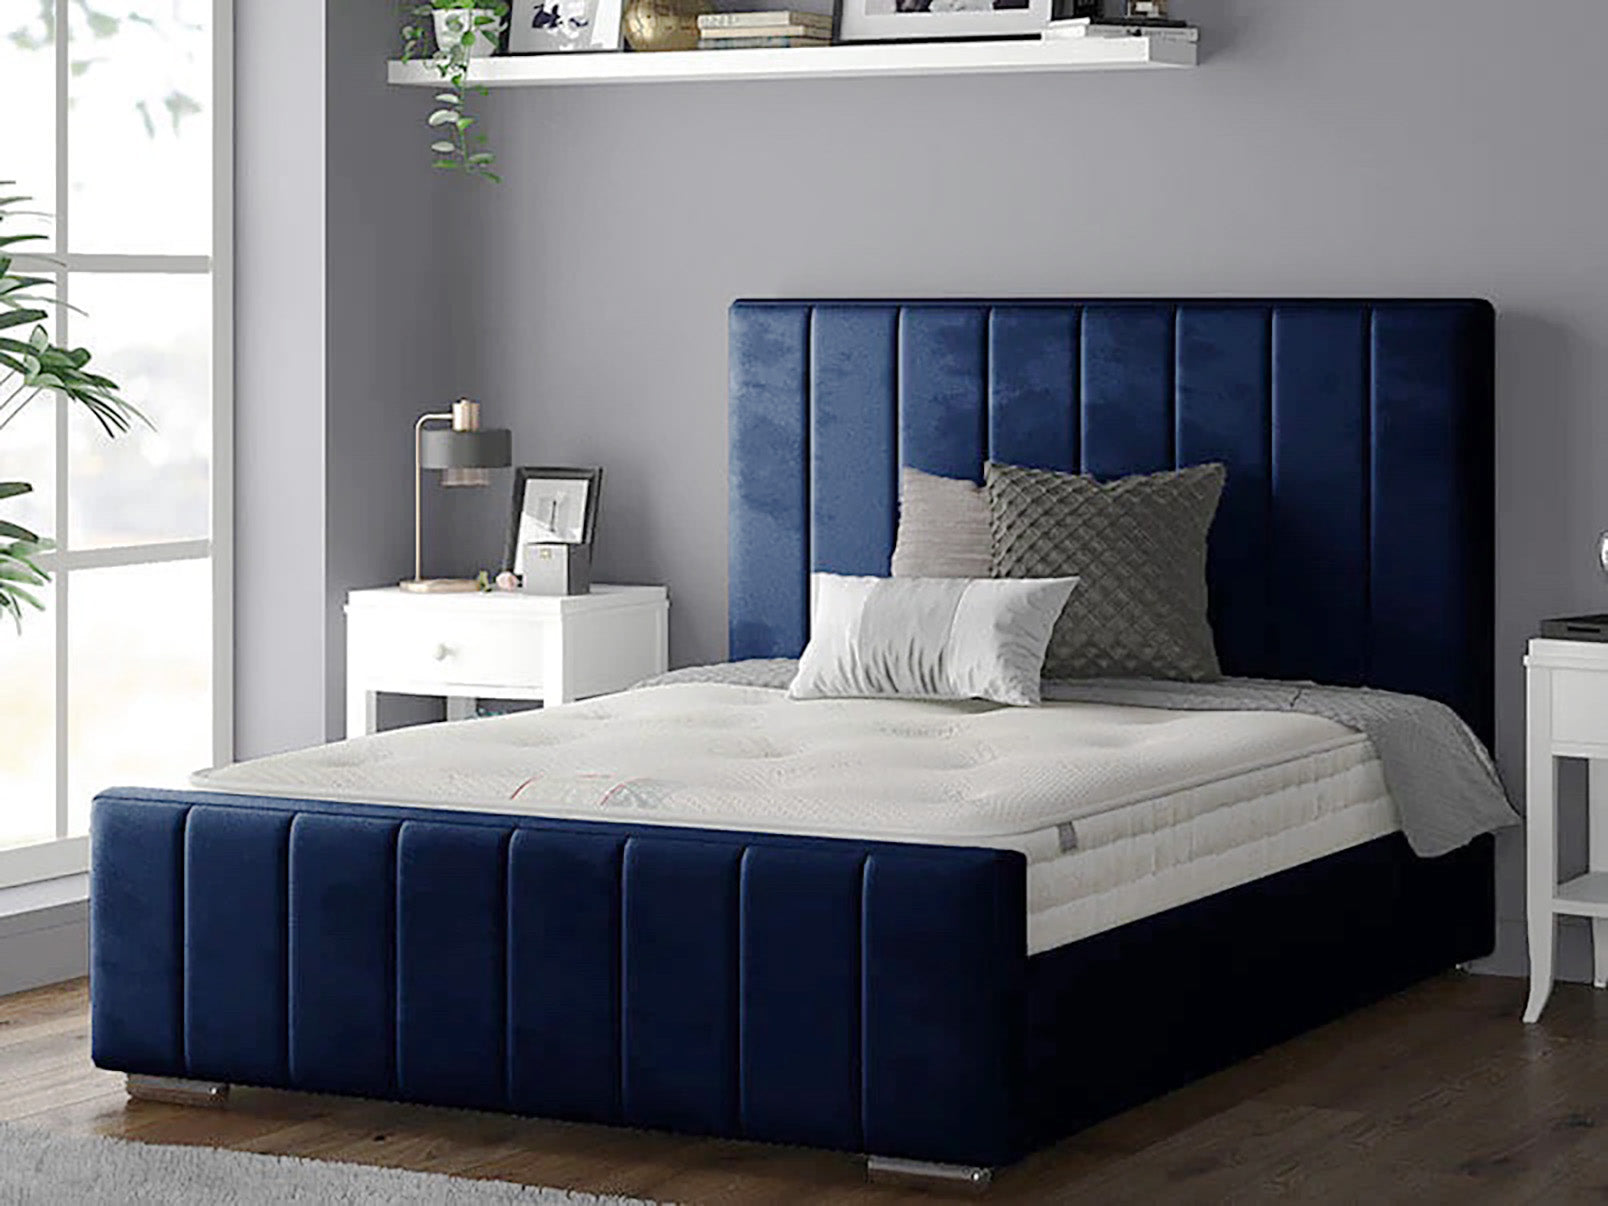 Perth Slatted Bed Frame With Ottoman Lift Storage Option - Plush Velvet Navy Blue